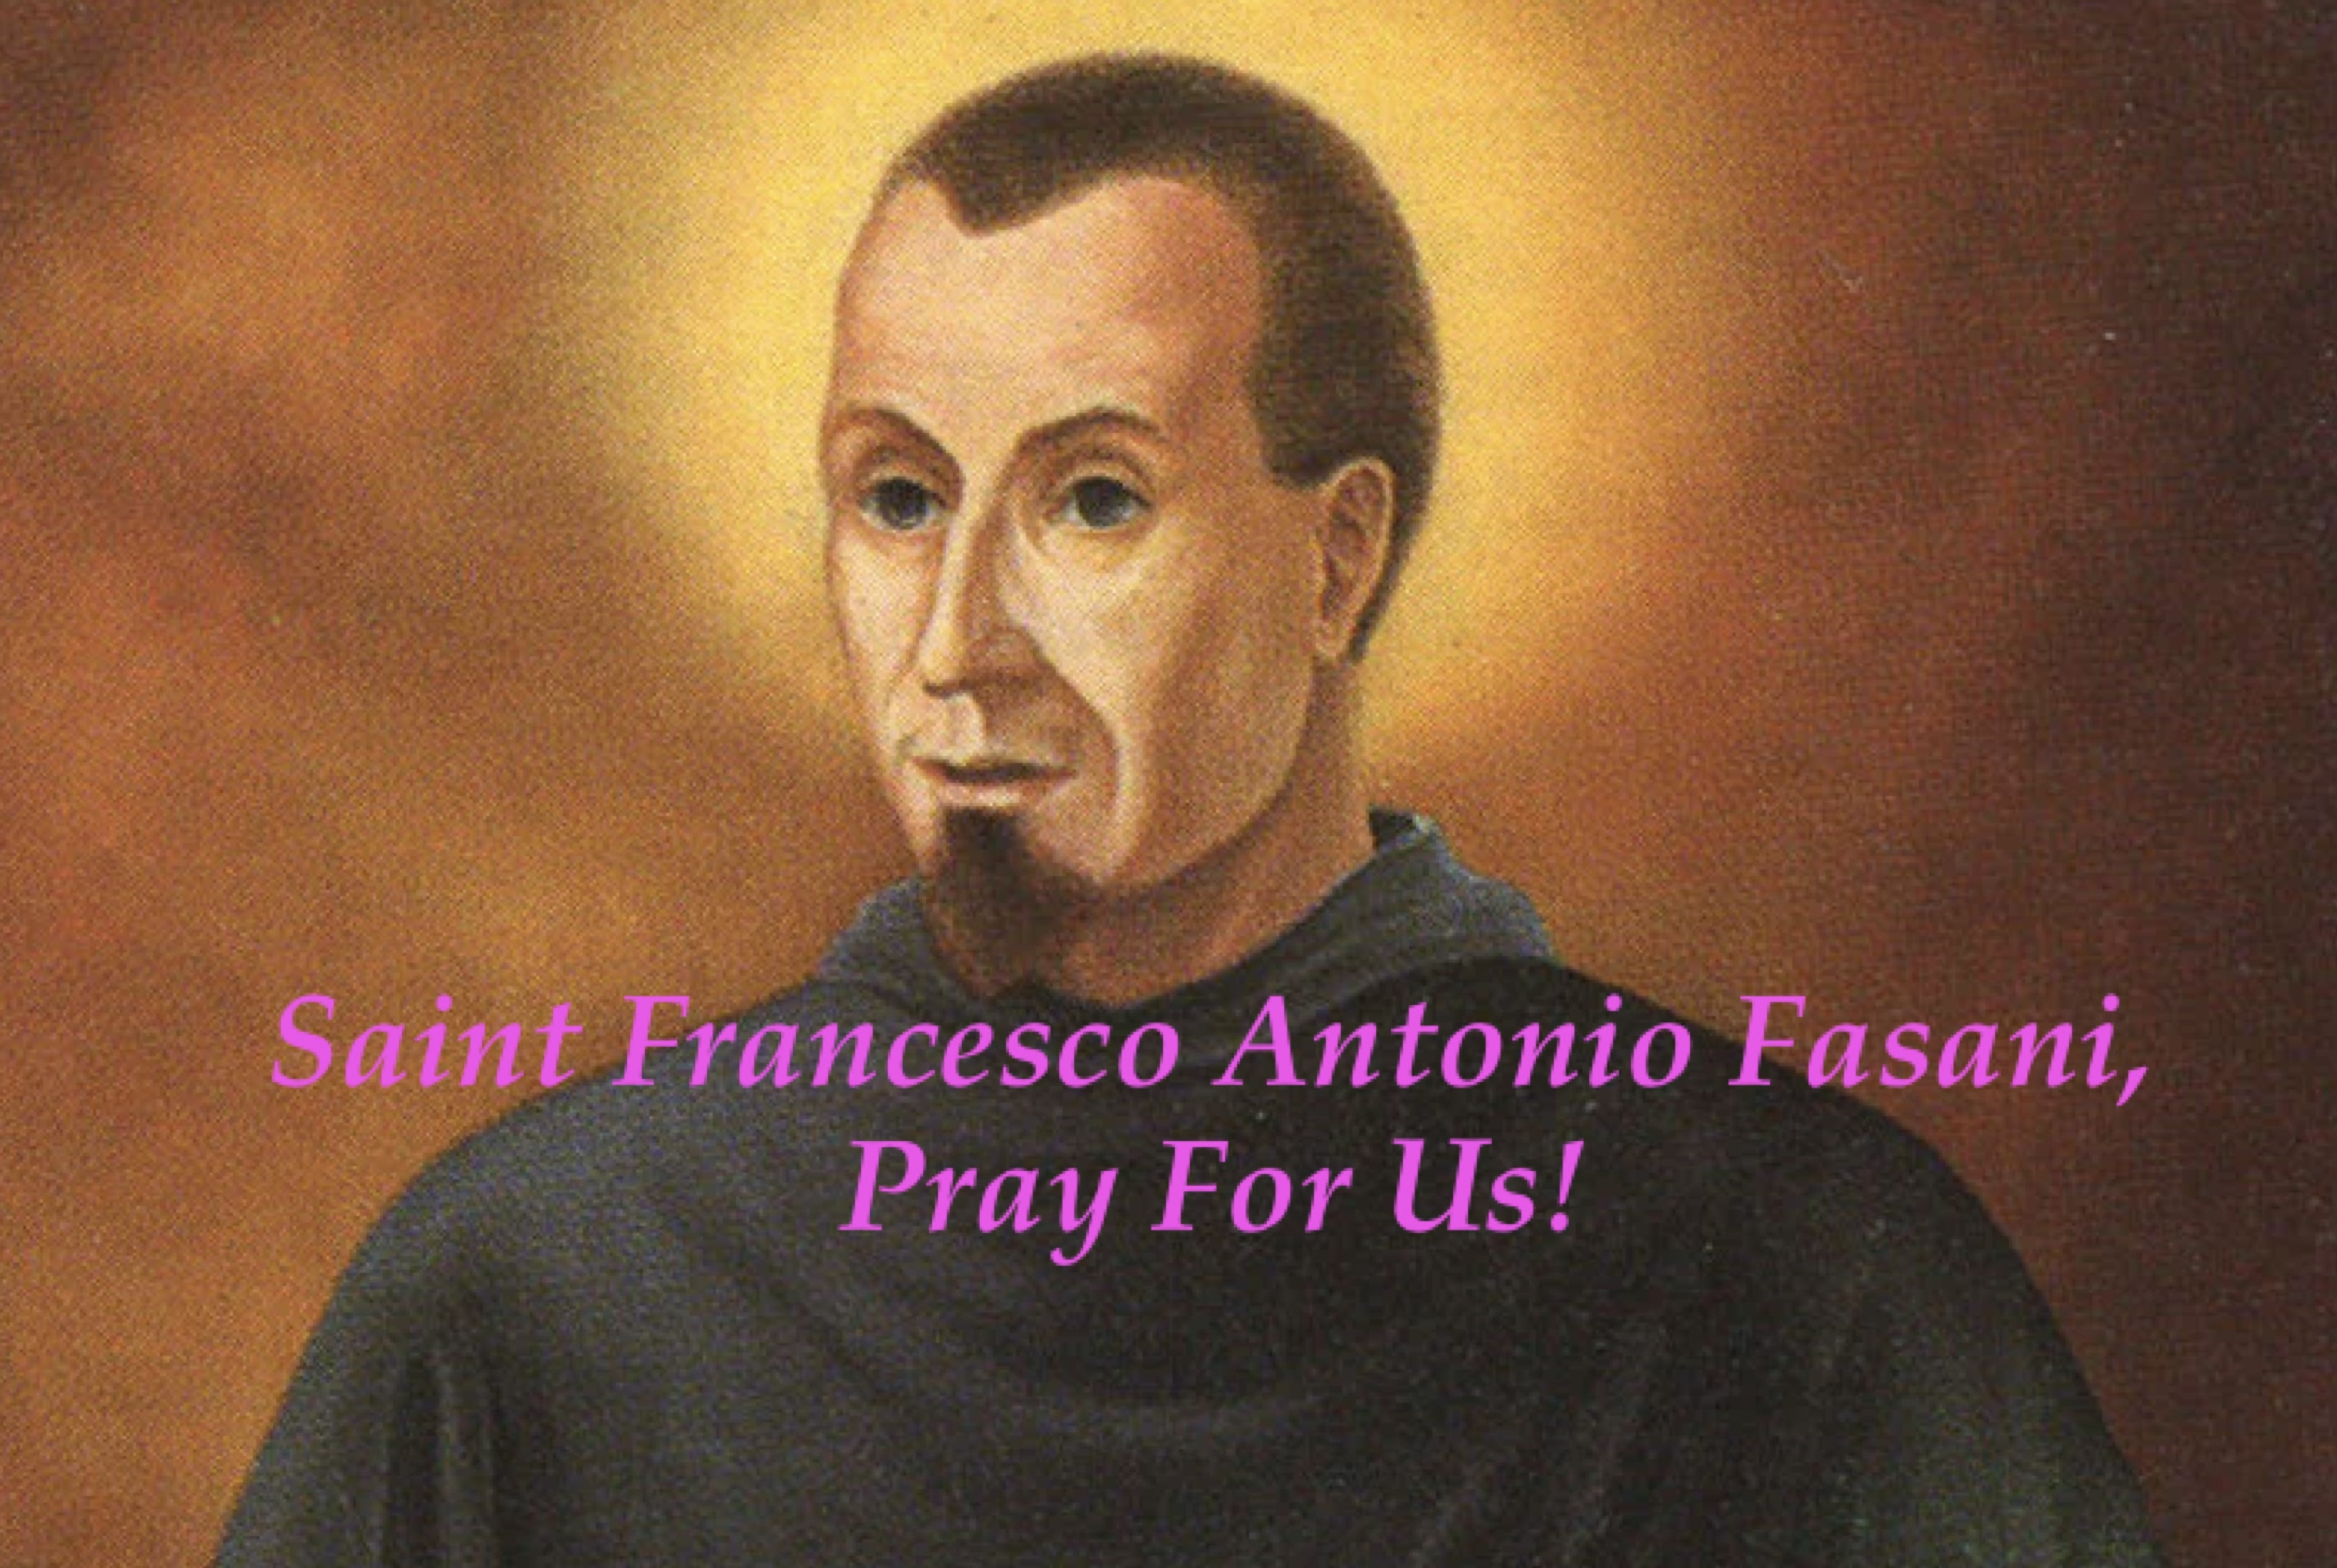 27th November - Saint Francesco Antonio Fasani